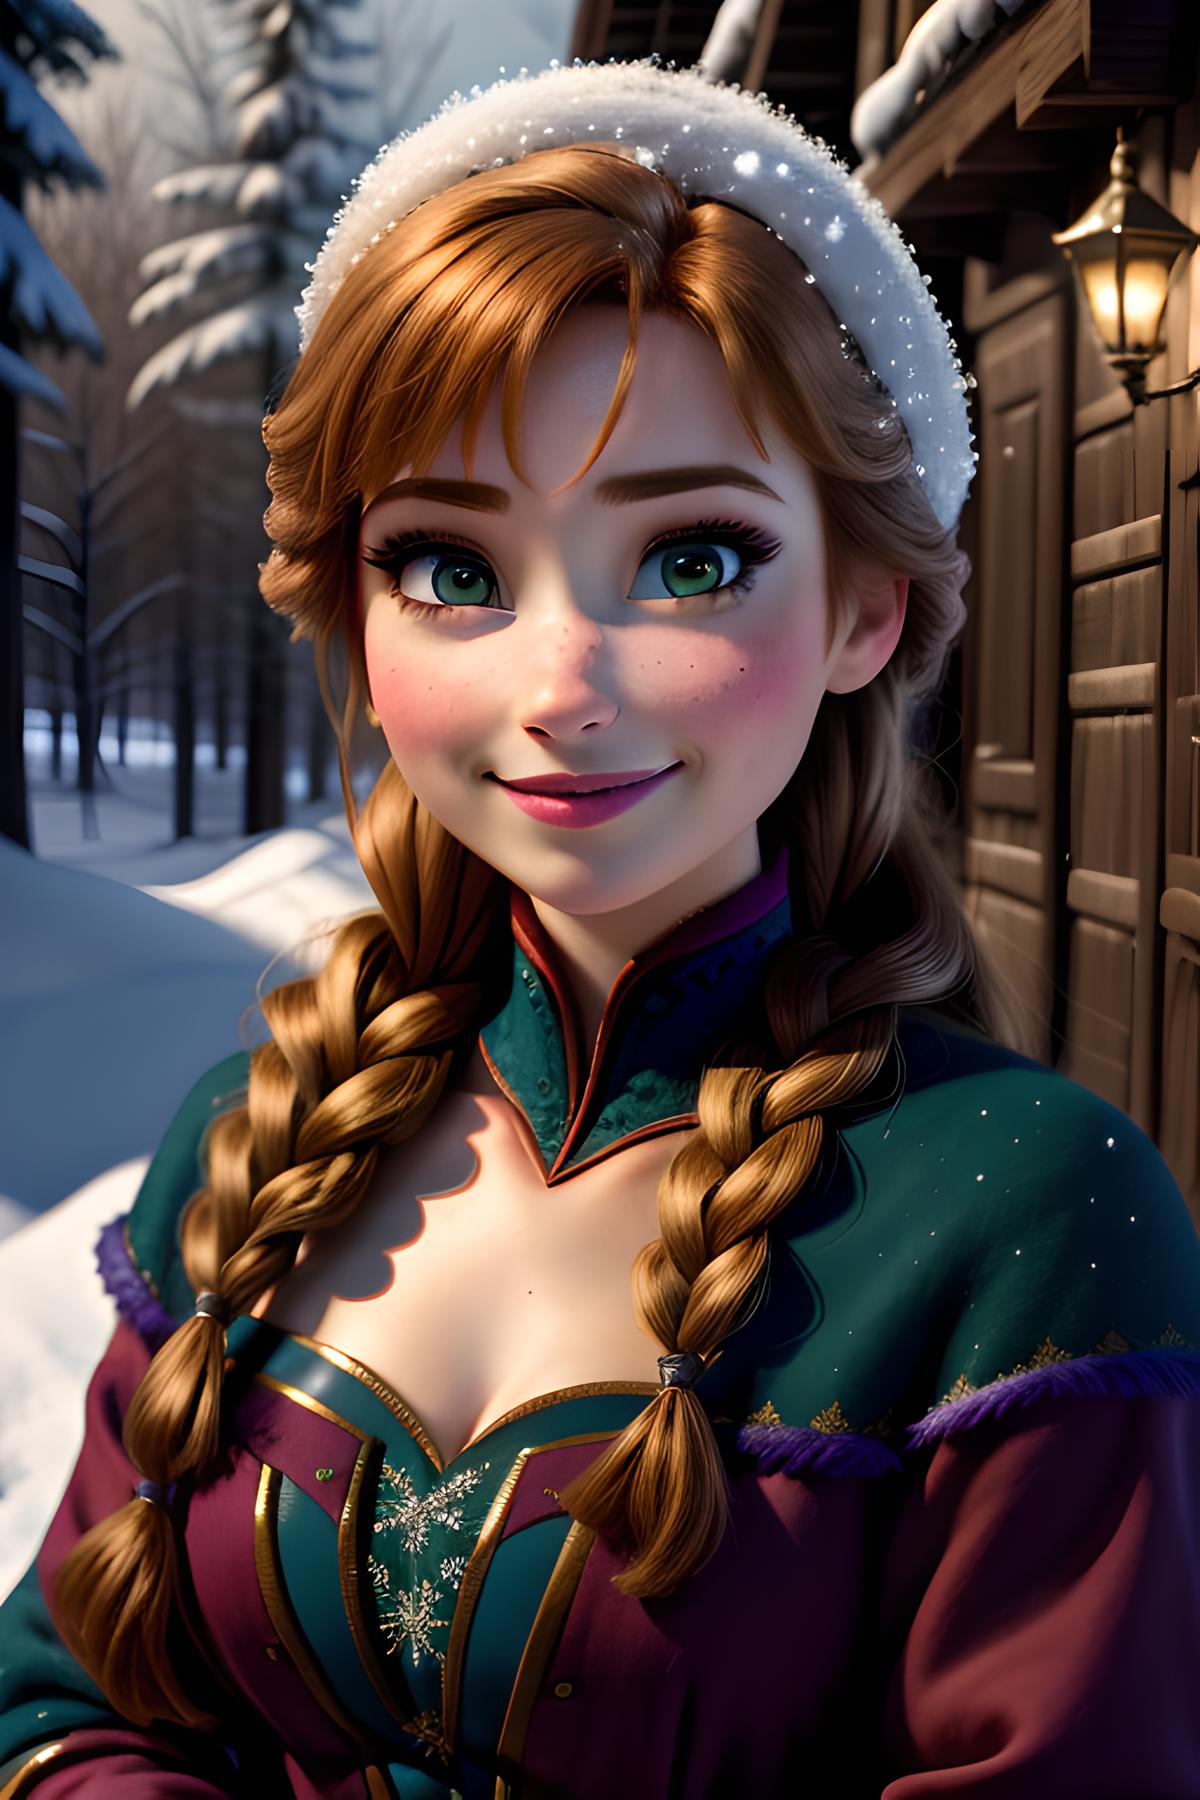 Hyper Realistic Disney Frozen Princess Anna in Snowy Forest